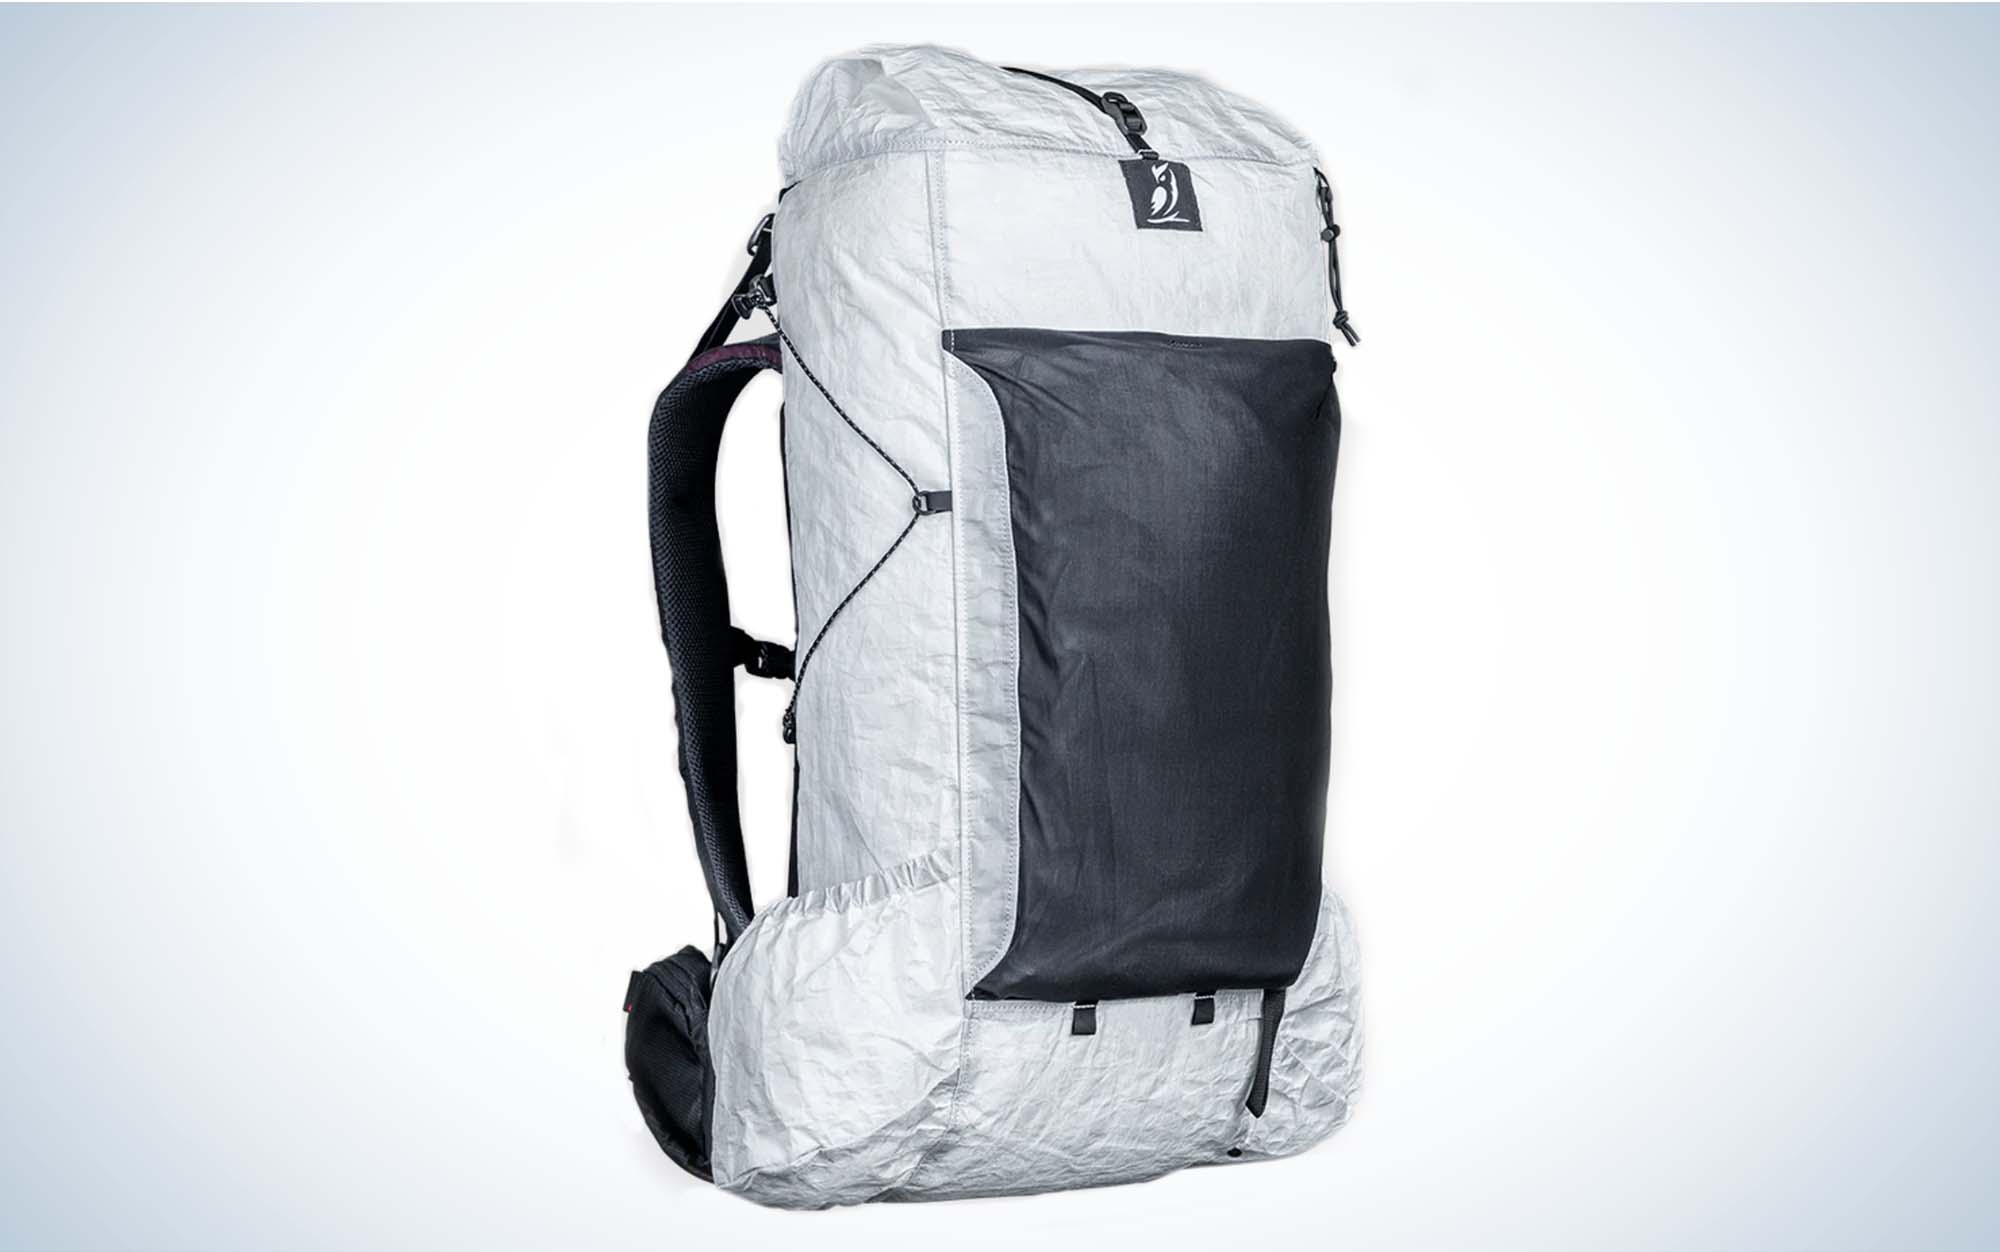 Customizable moon Backpack Bottom Length 